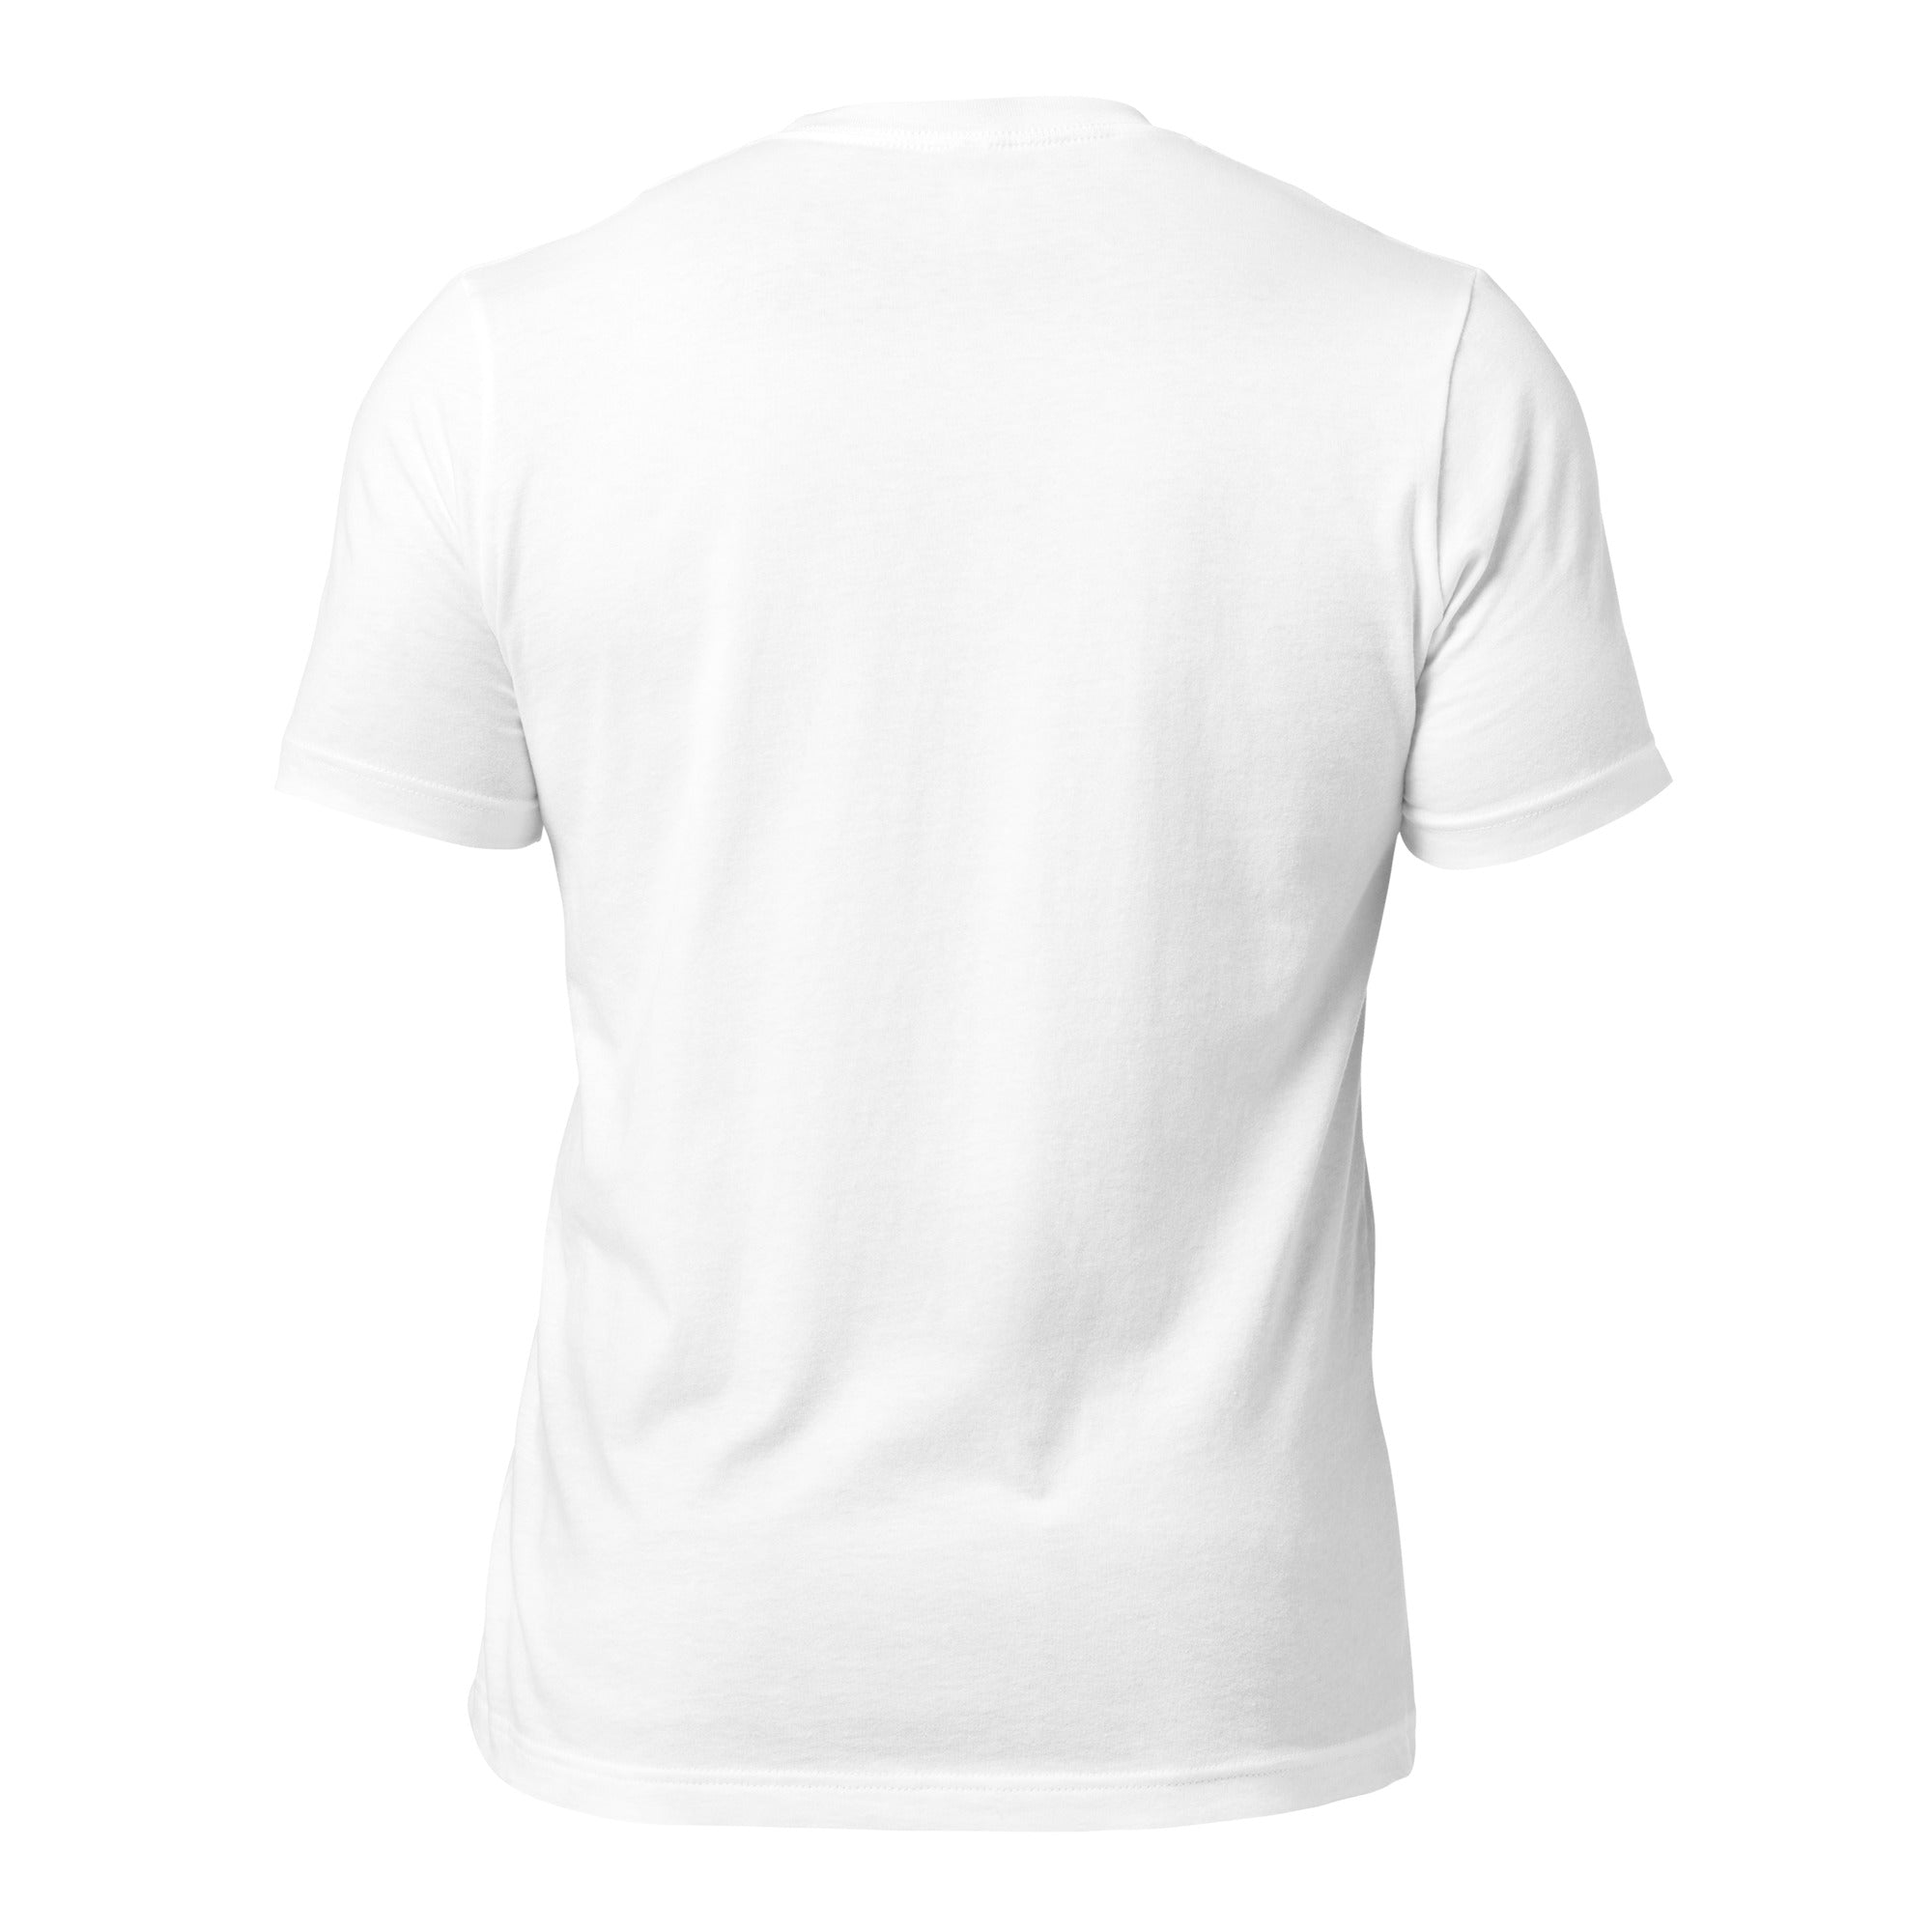 Beauceron - Short Sleeve Cotton Tee  Shirt